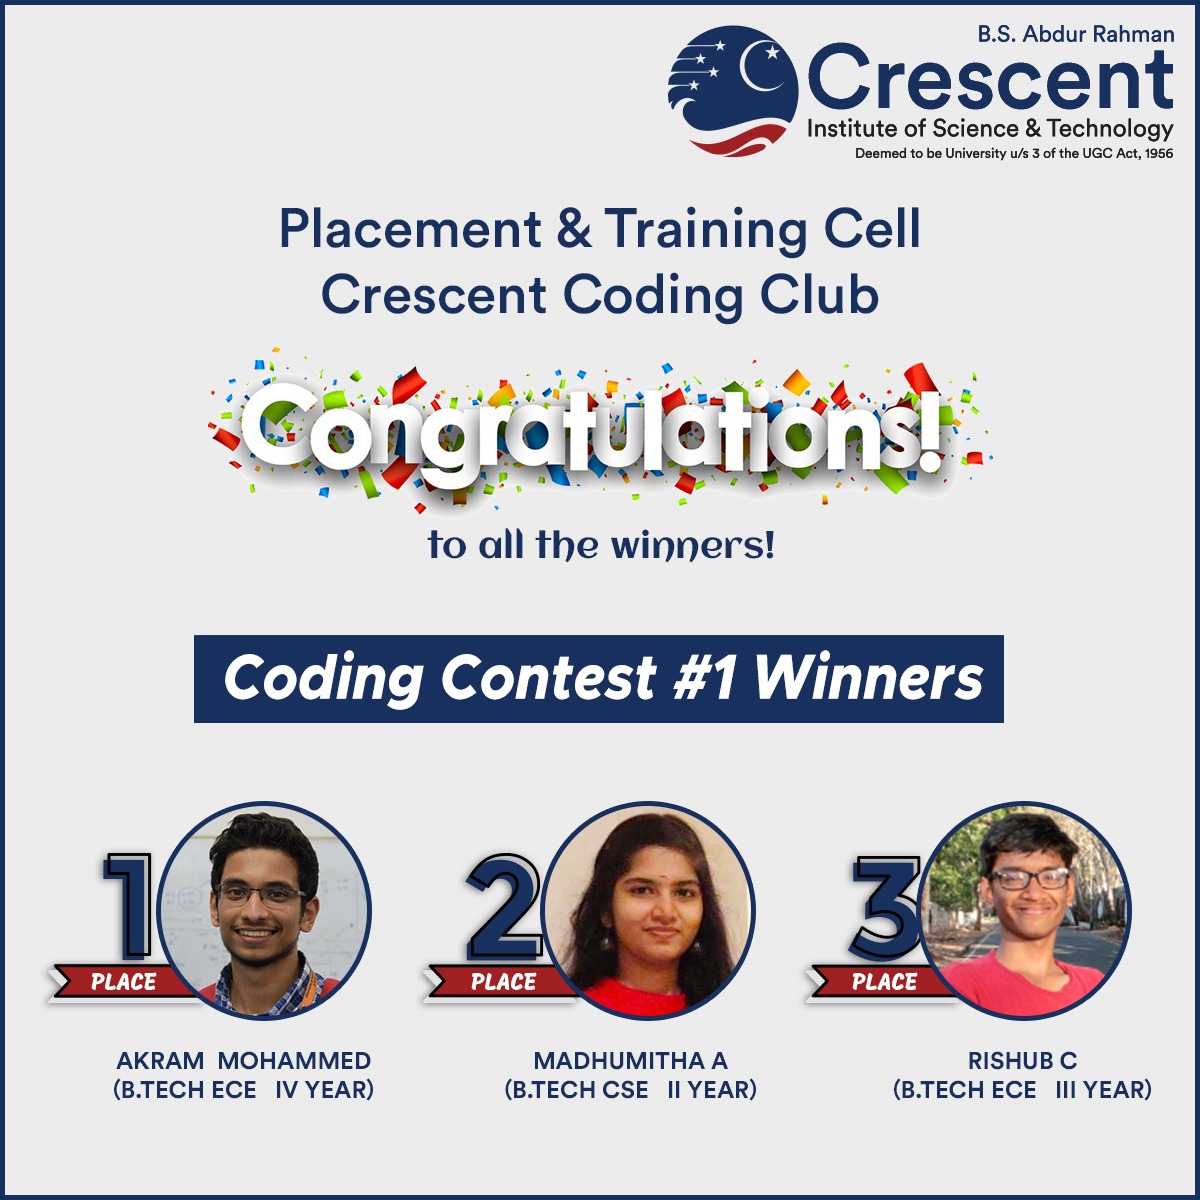 Coding Contest #1 Winners